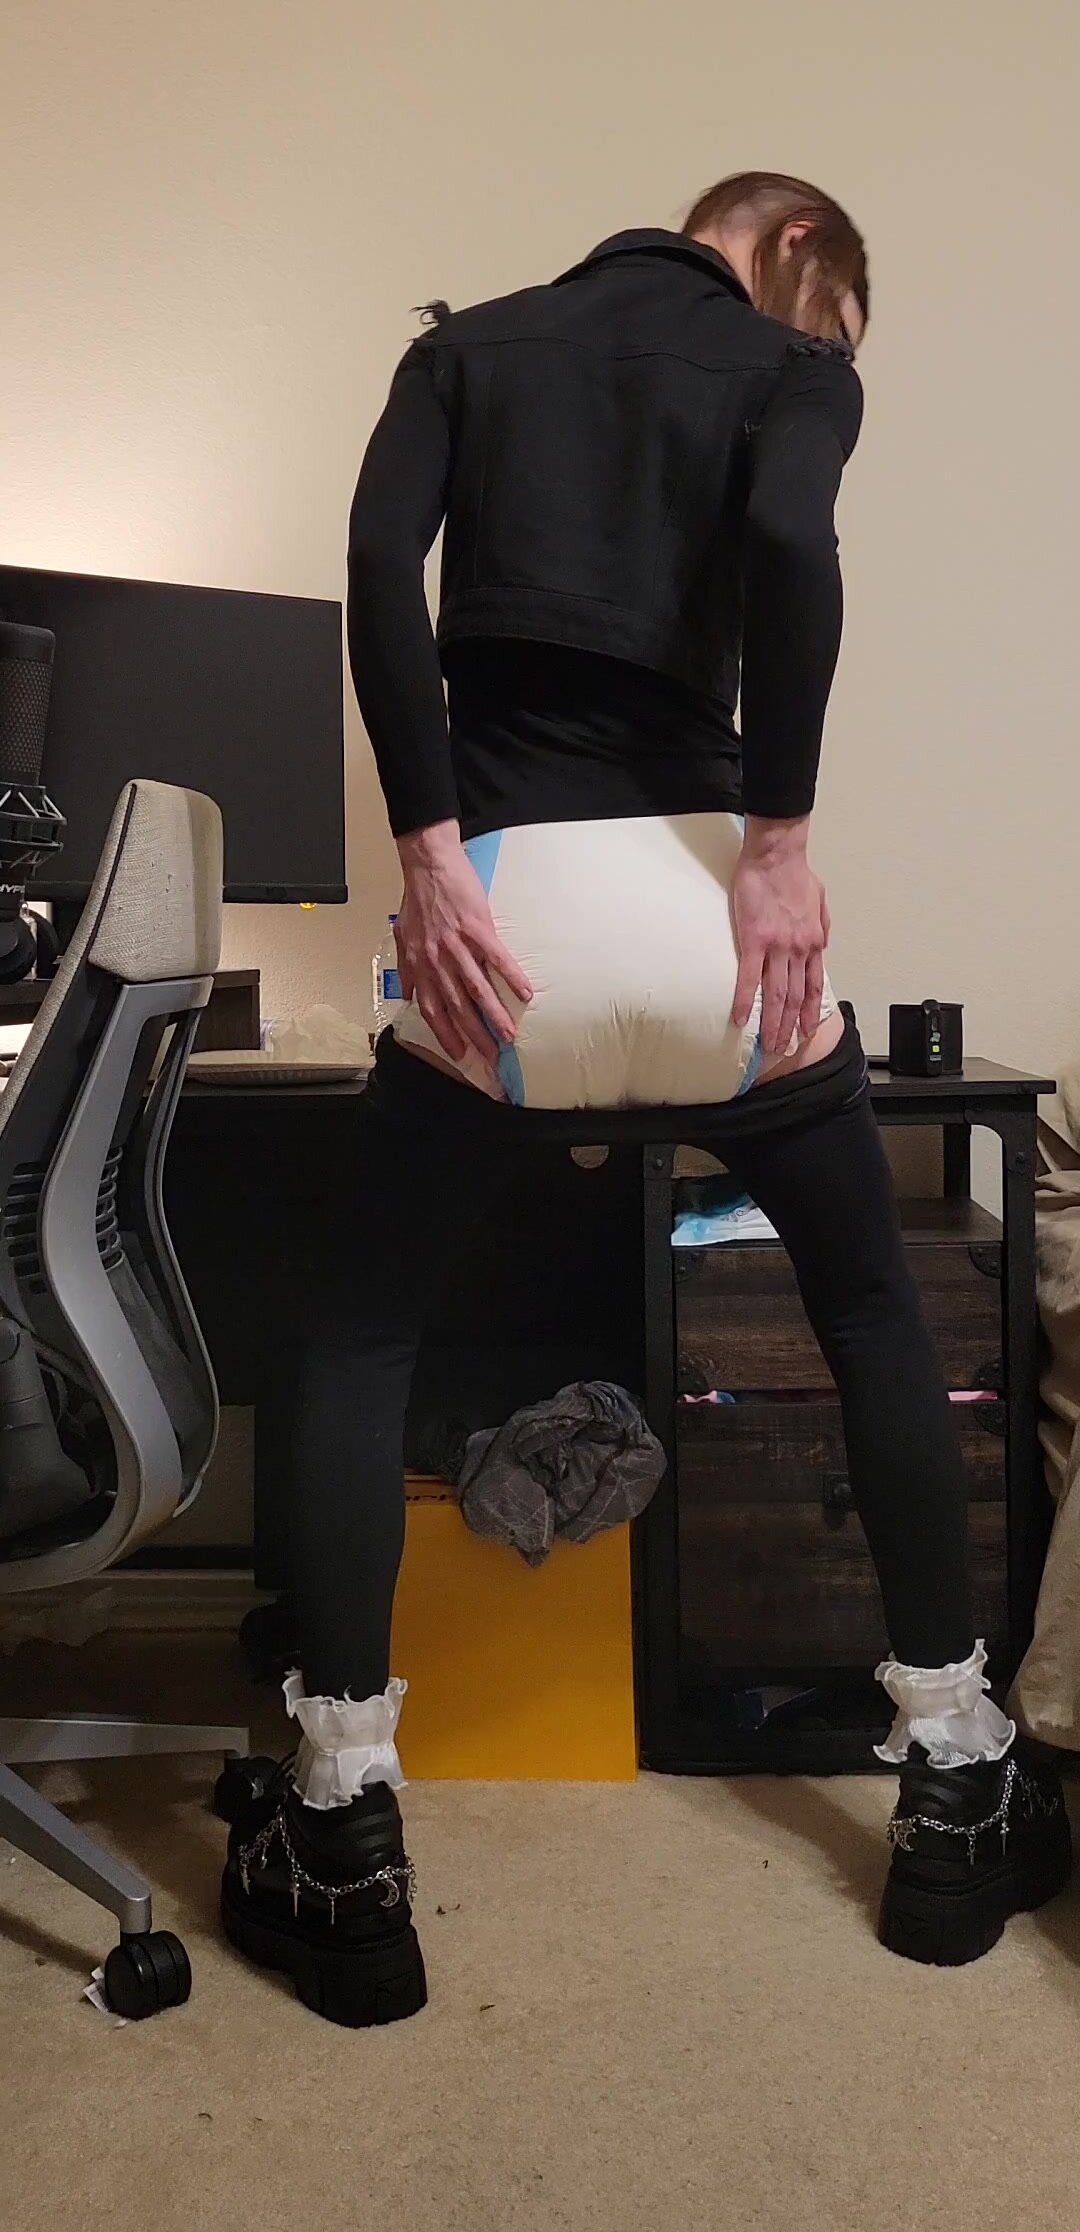 Femboy shows diaper under leggings